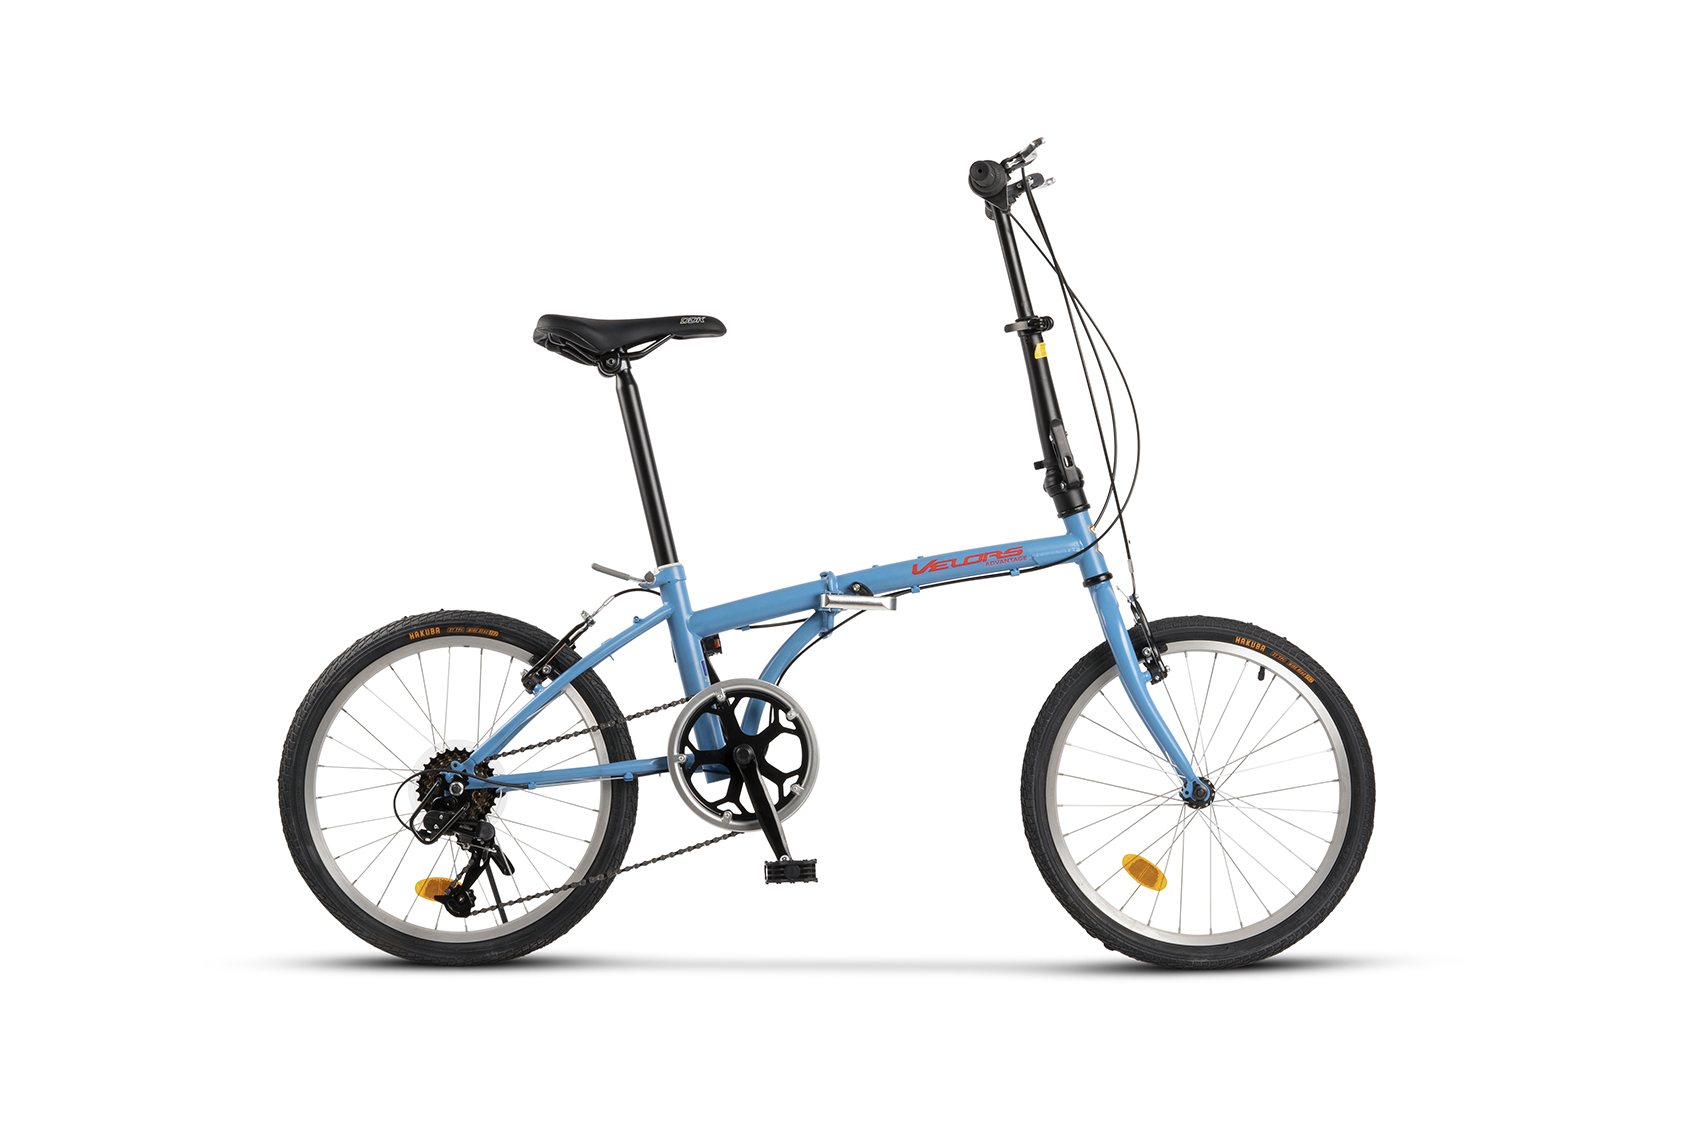 BICICLETE PLIABILE - Bicicleta Pliabila Velors Advantage V2052A 20", Albastru/Rosu, carpatsport.ro